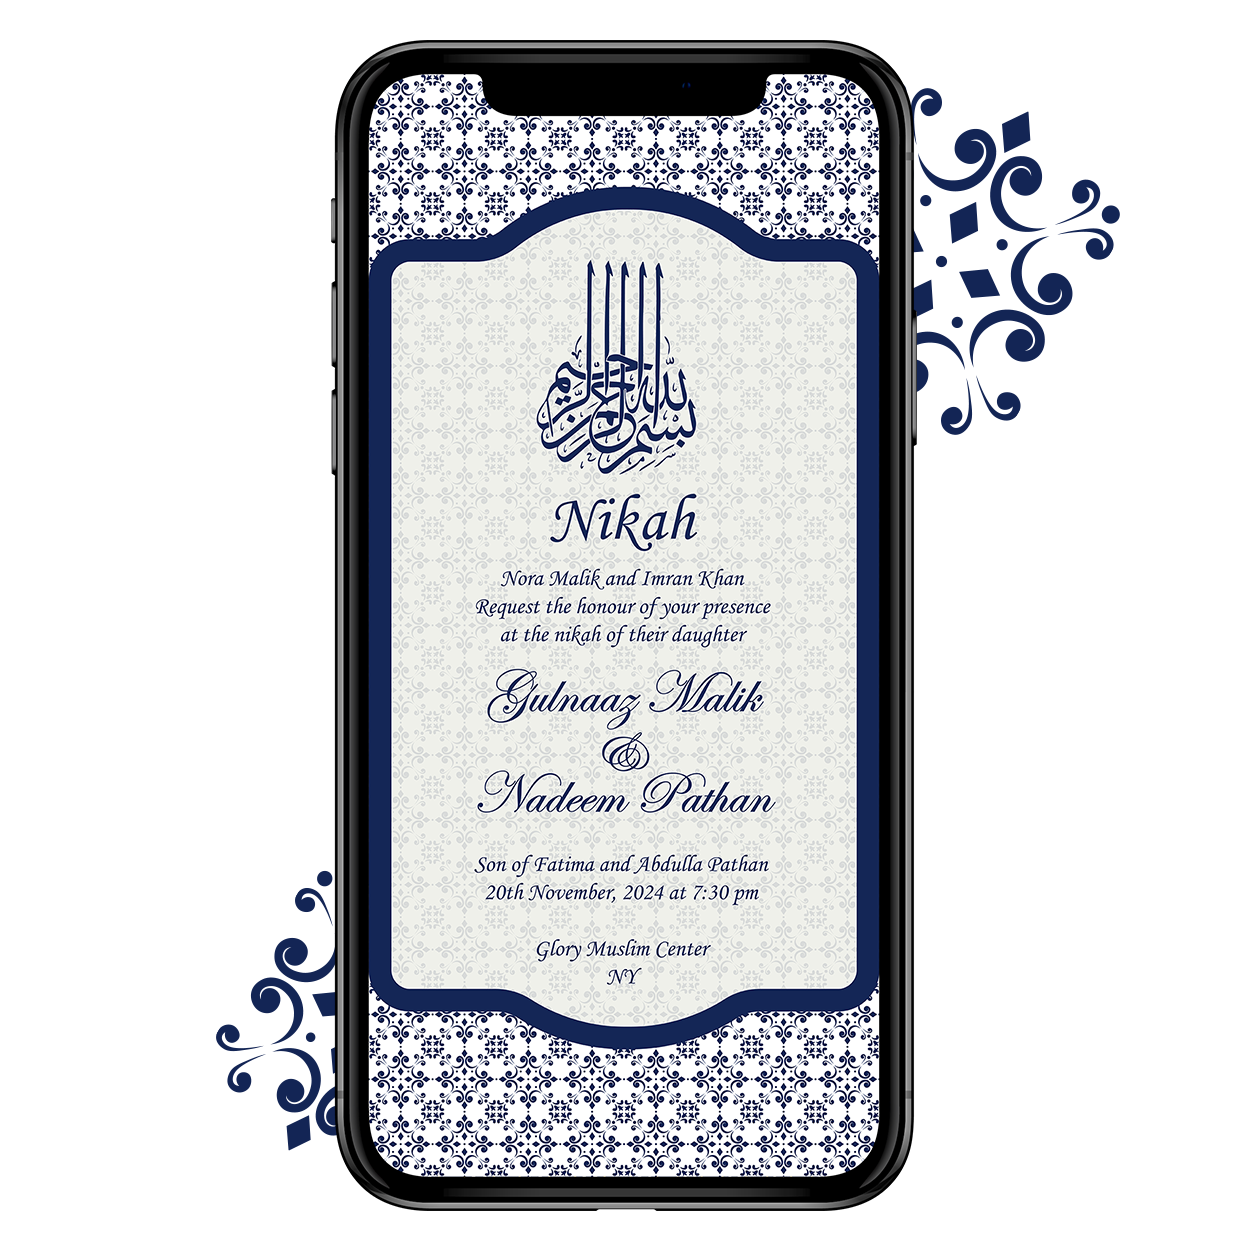 Muslim wedding cards online